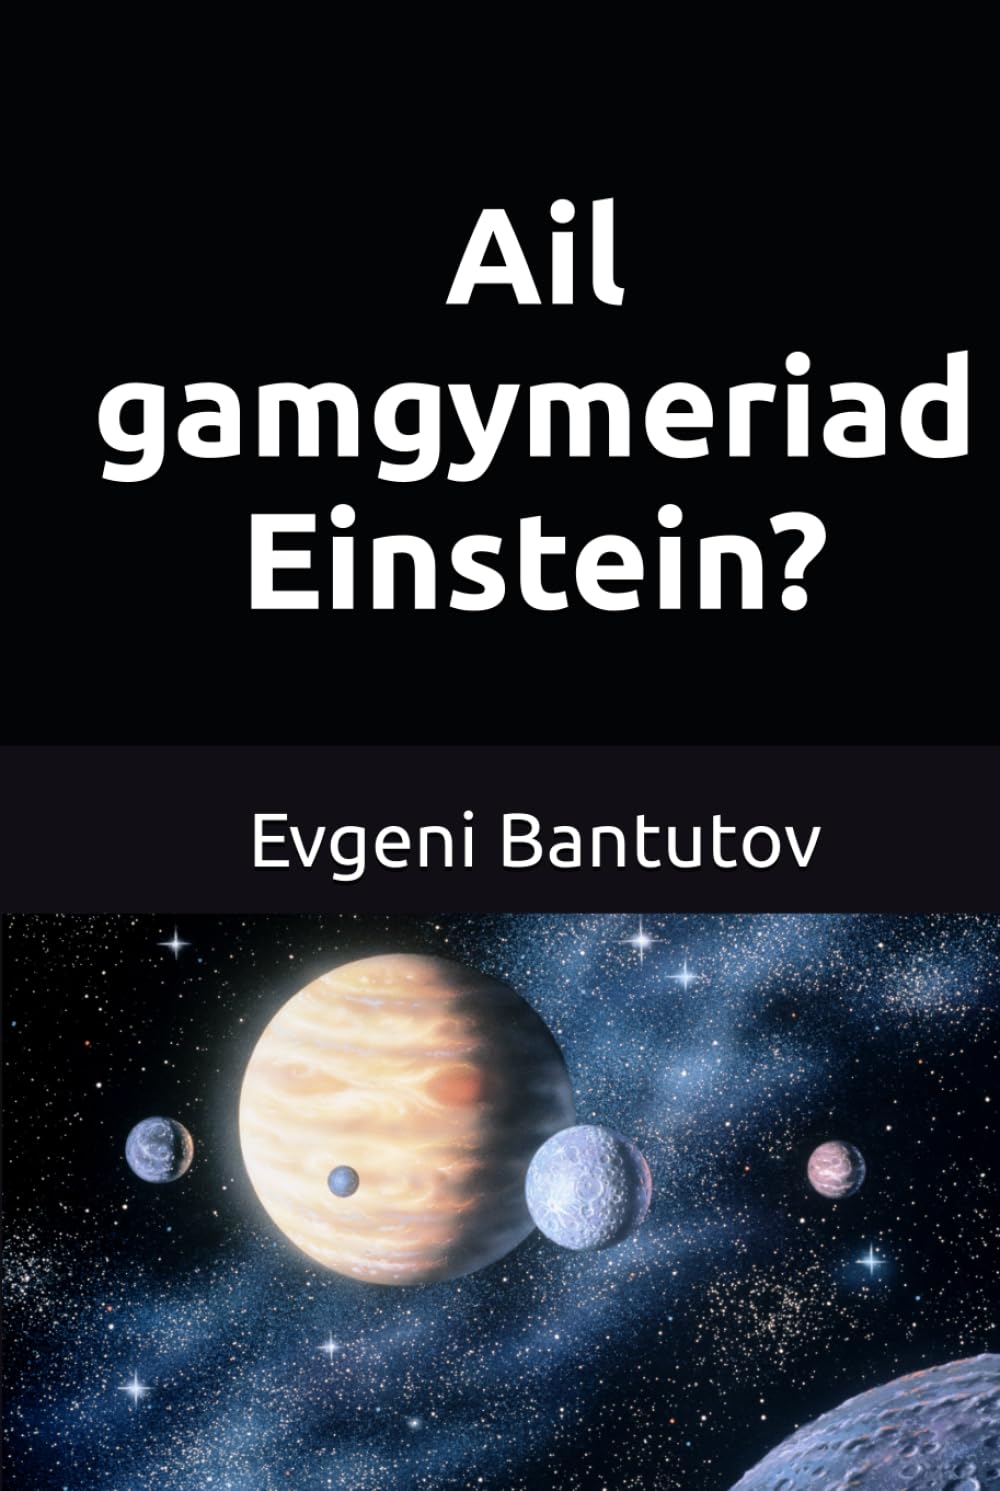 Ail gamgymeriad Einstein? (welsh. PROBLEMAU FFISEG FODERN. CAMGYMERIADAU EINSTEIN.)